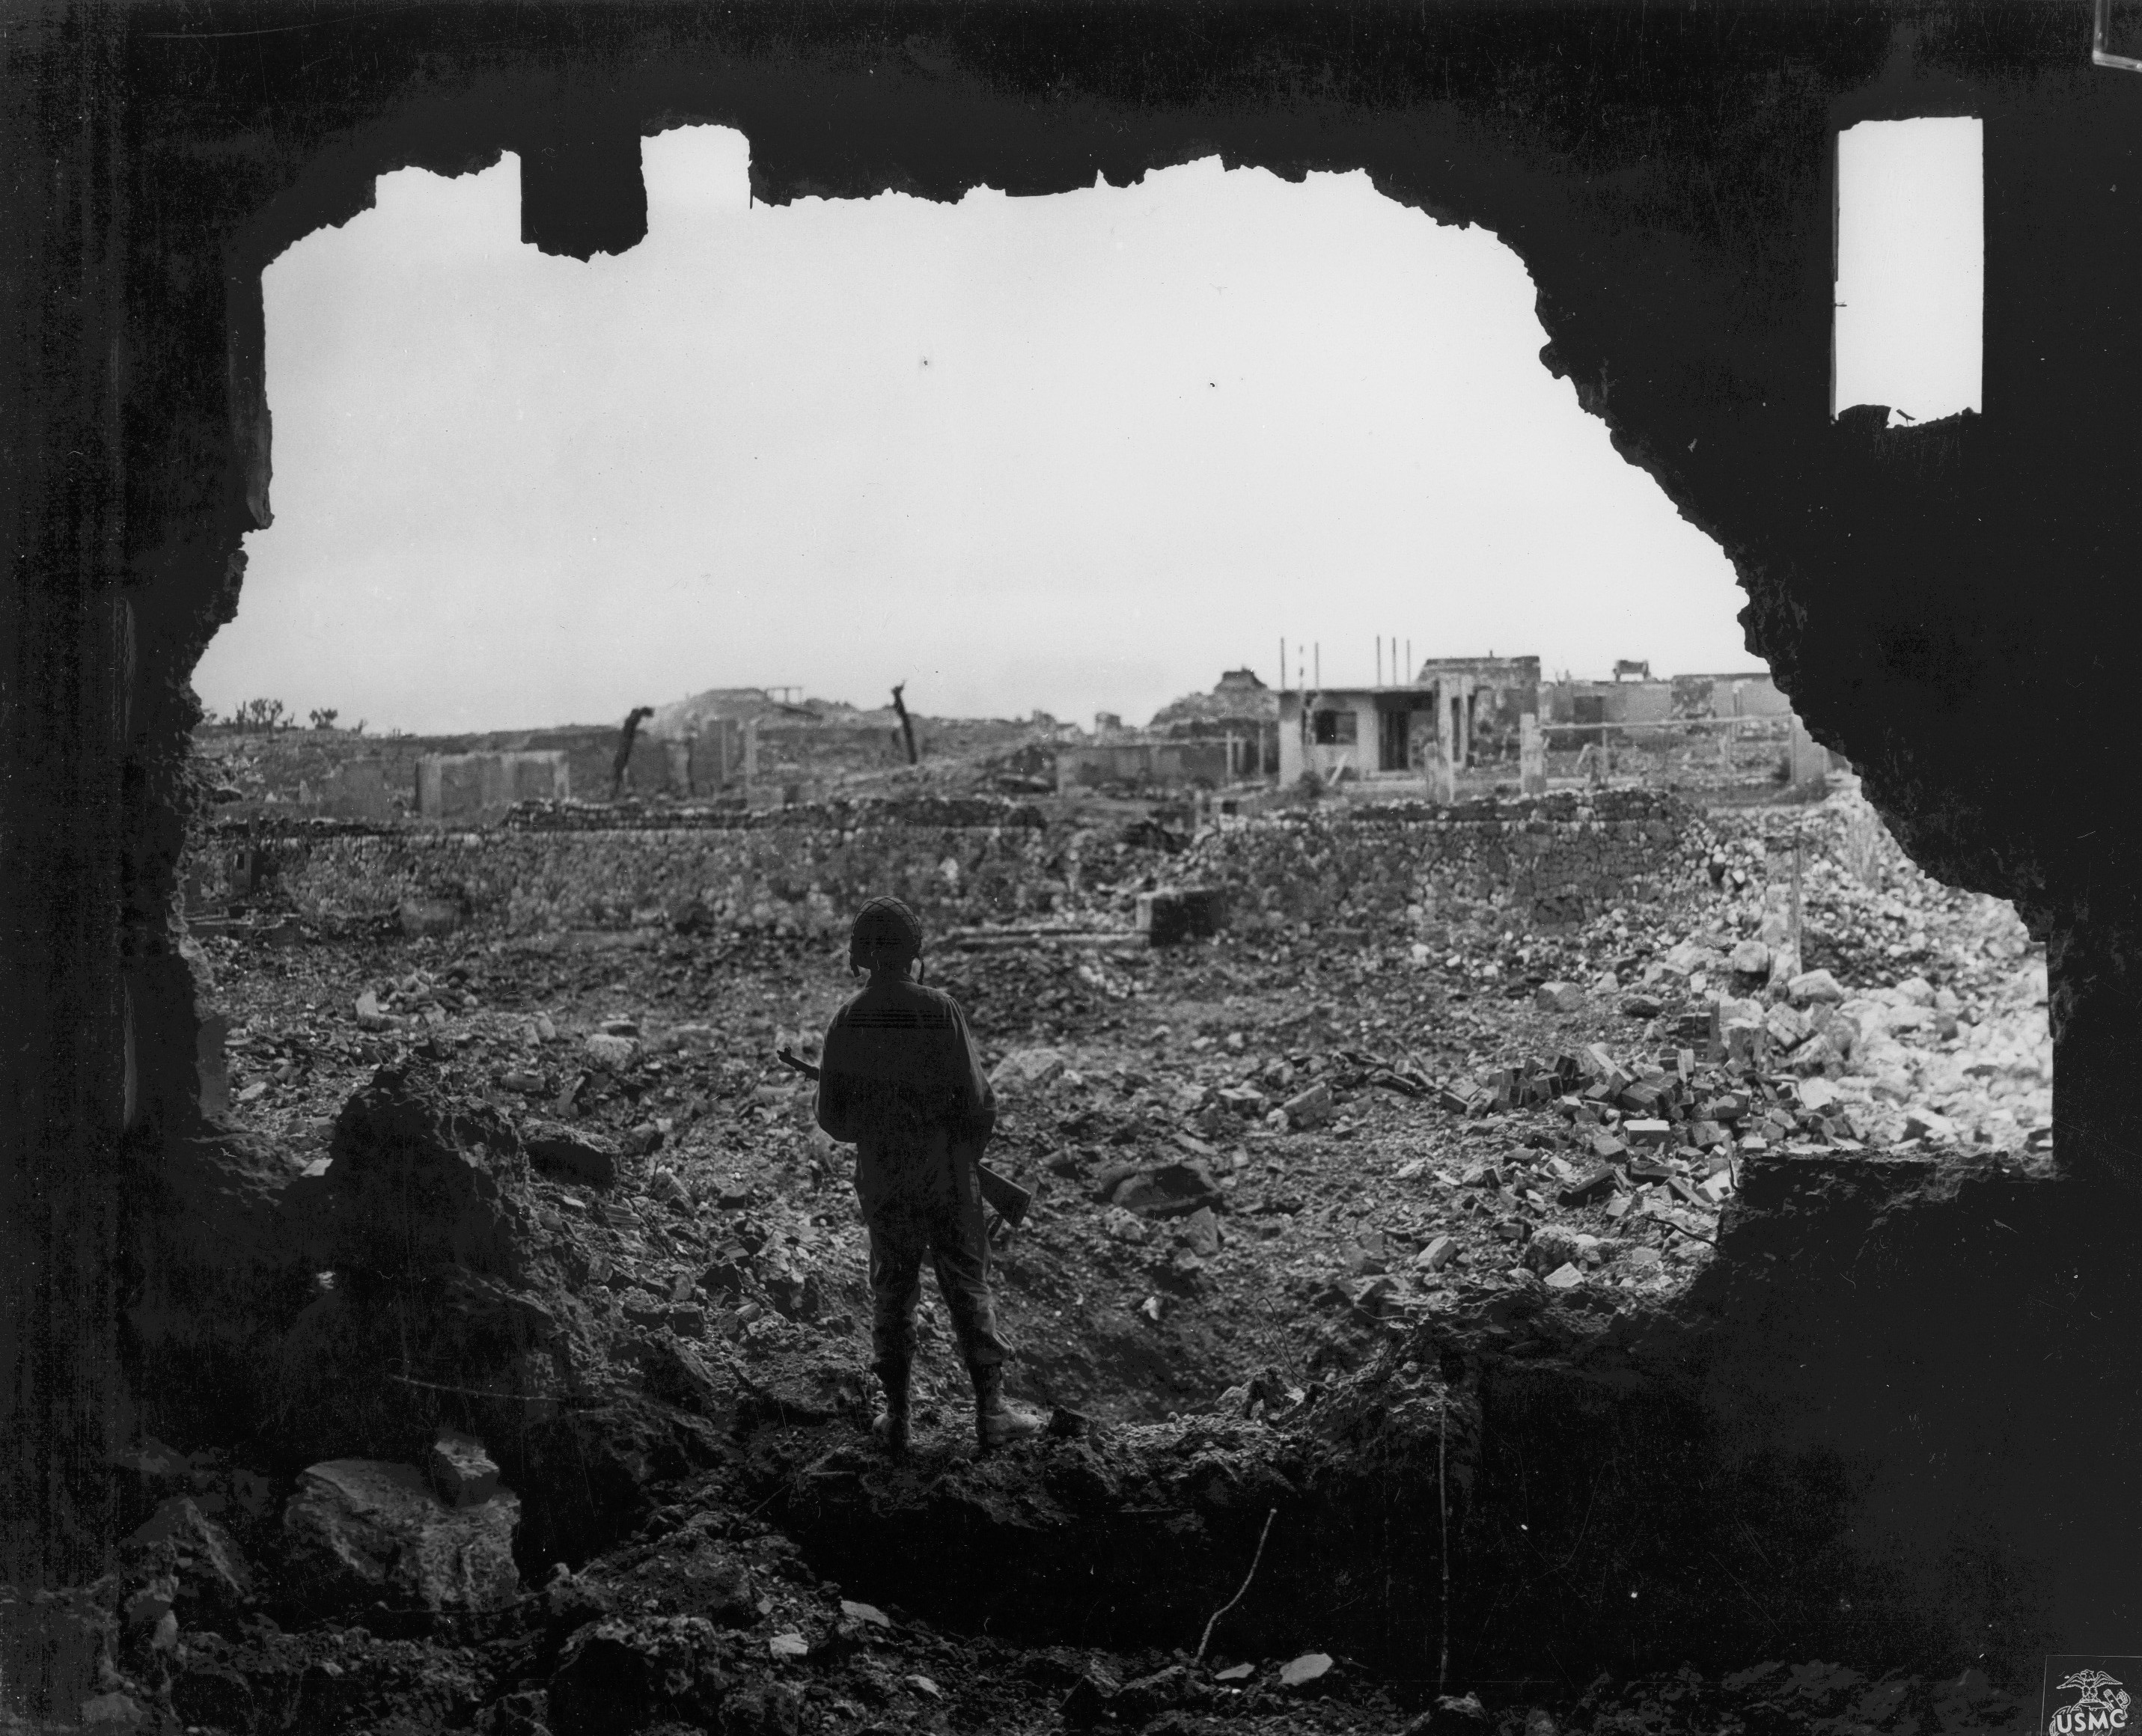 A US Marine observing ruined buildings in Naha, Okinawa, Japan, 13 Jun 1945